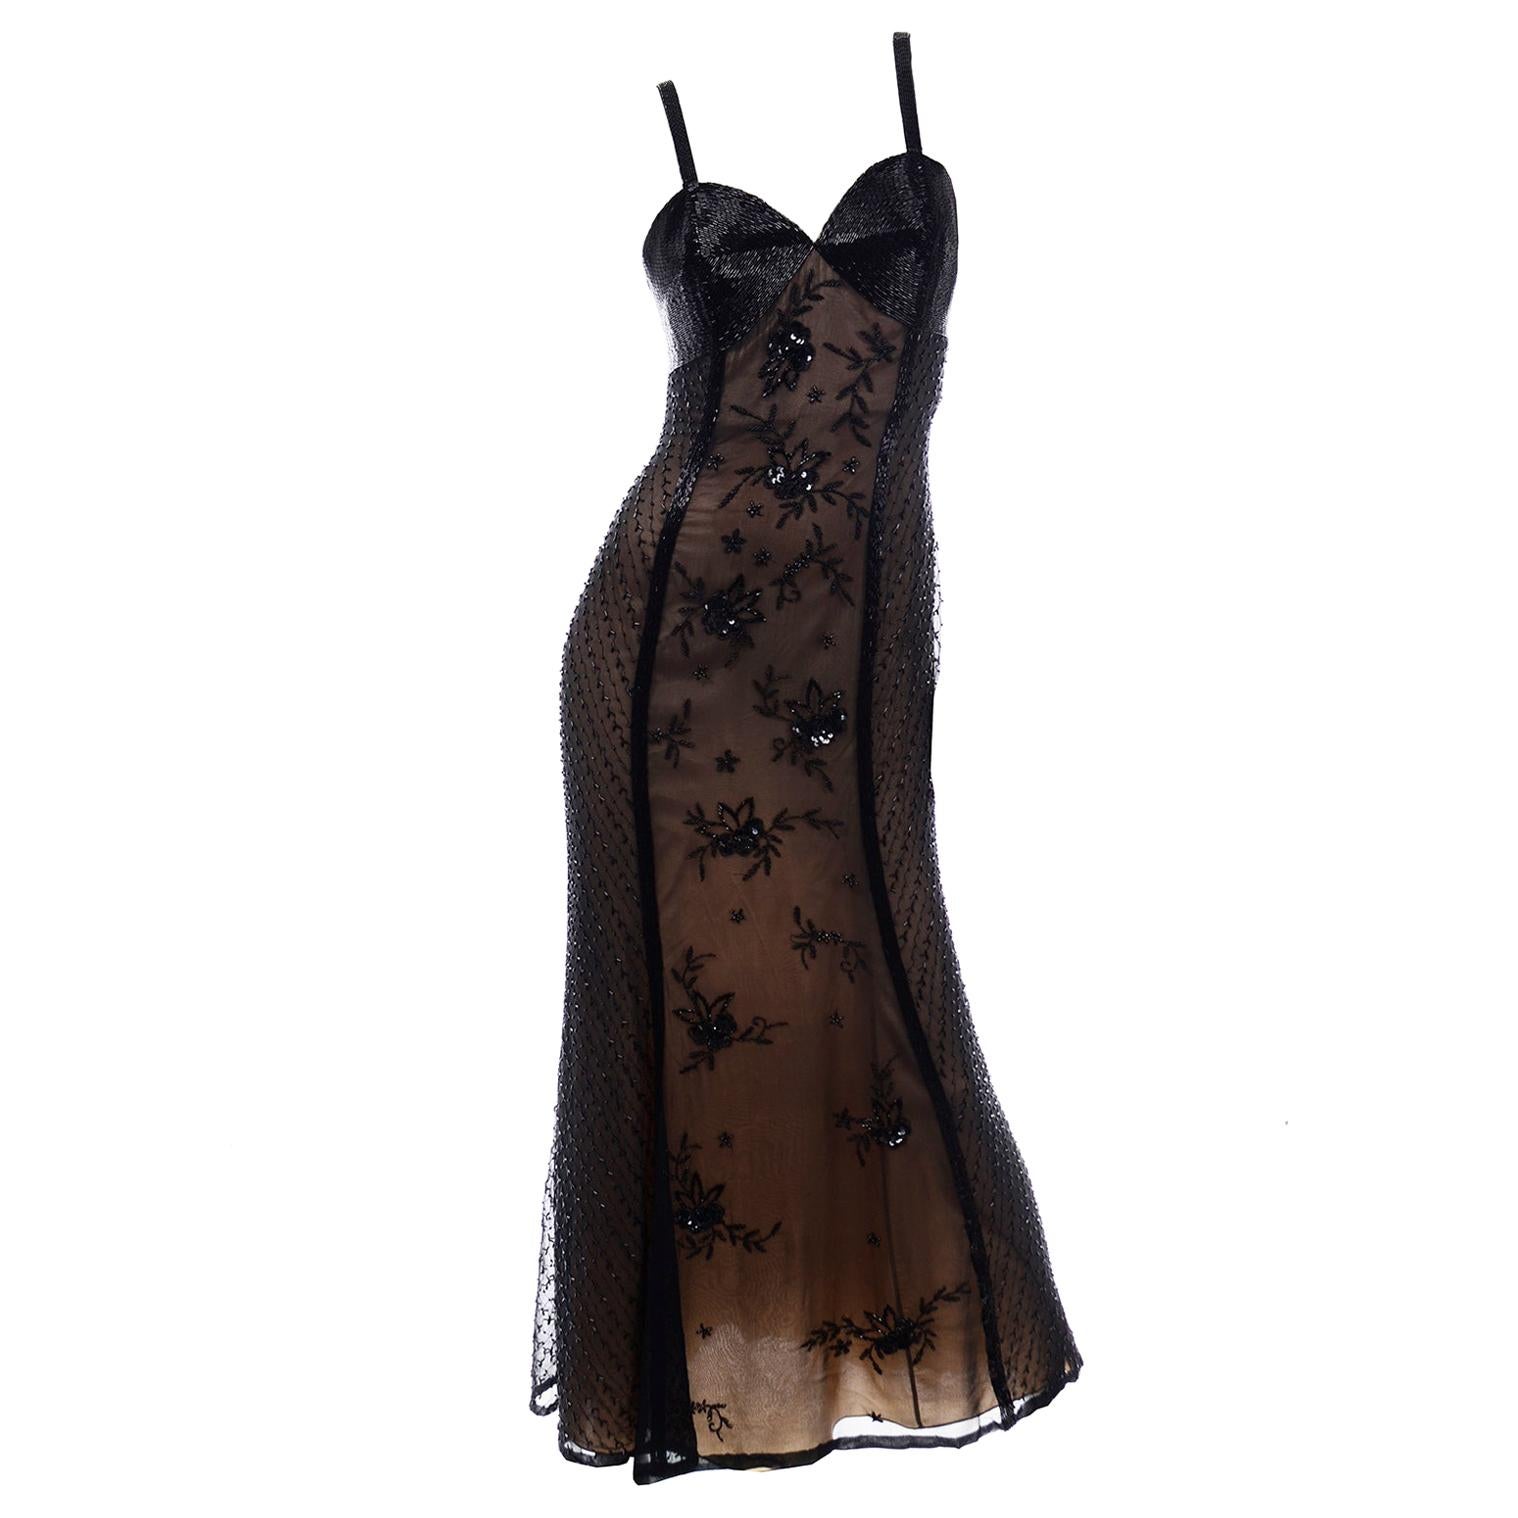 Black Beaded Sheer Evening Dress over Beige Under dress w Heavily Beaded Bodice